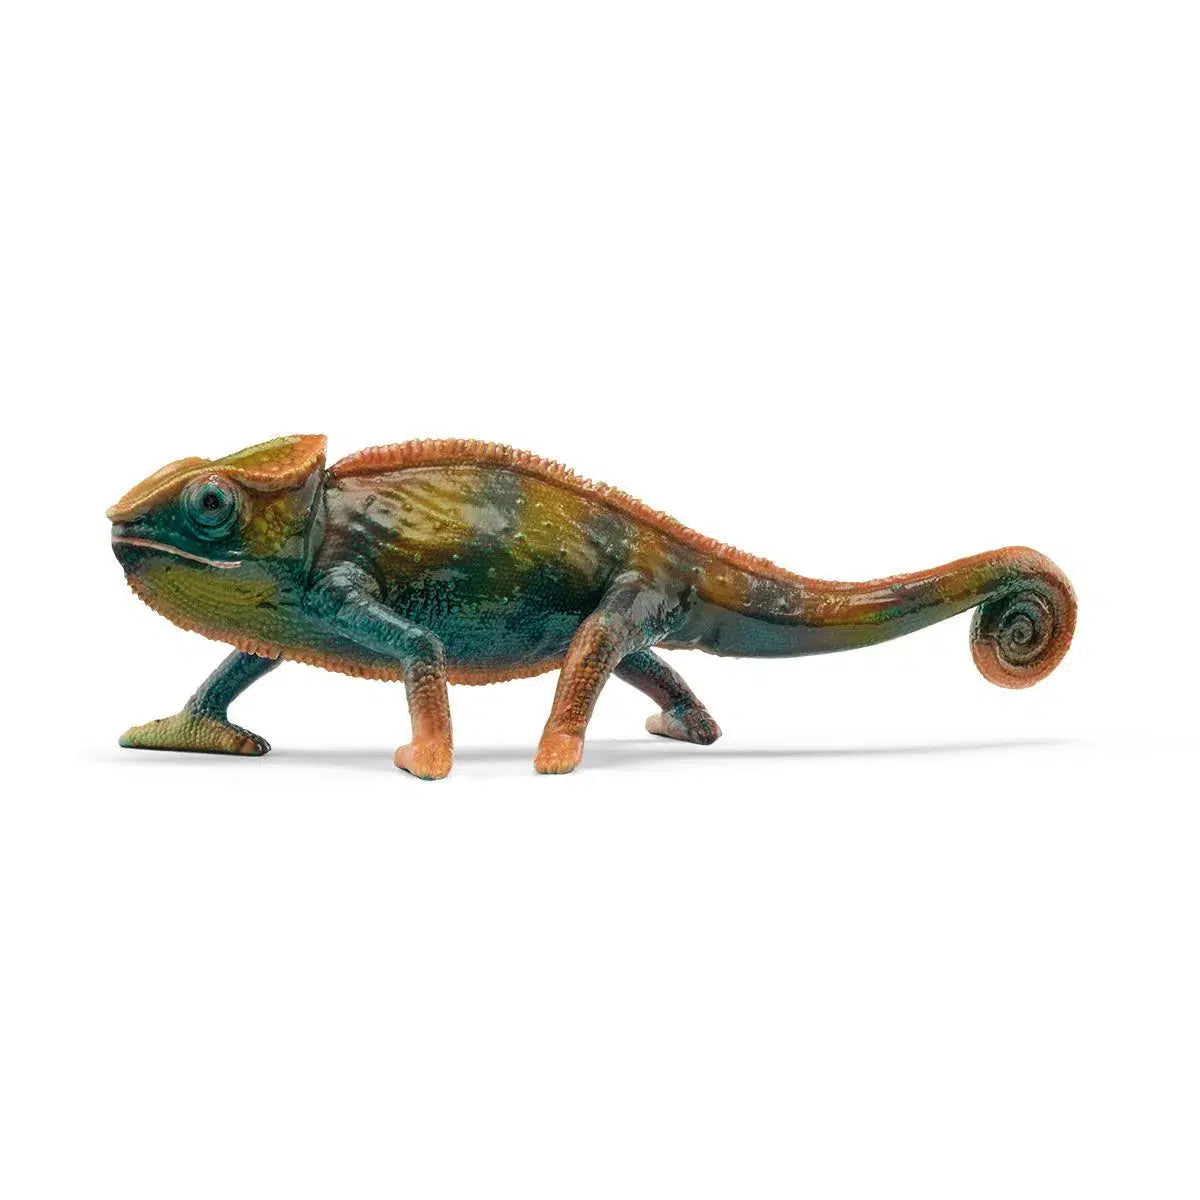 Schleich-Chameleon-14858-Legacy Toys